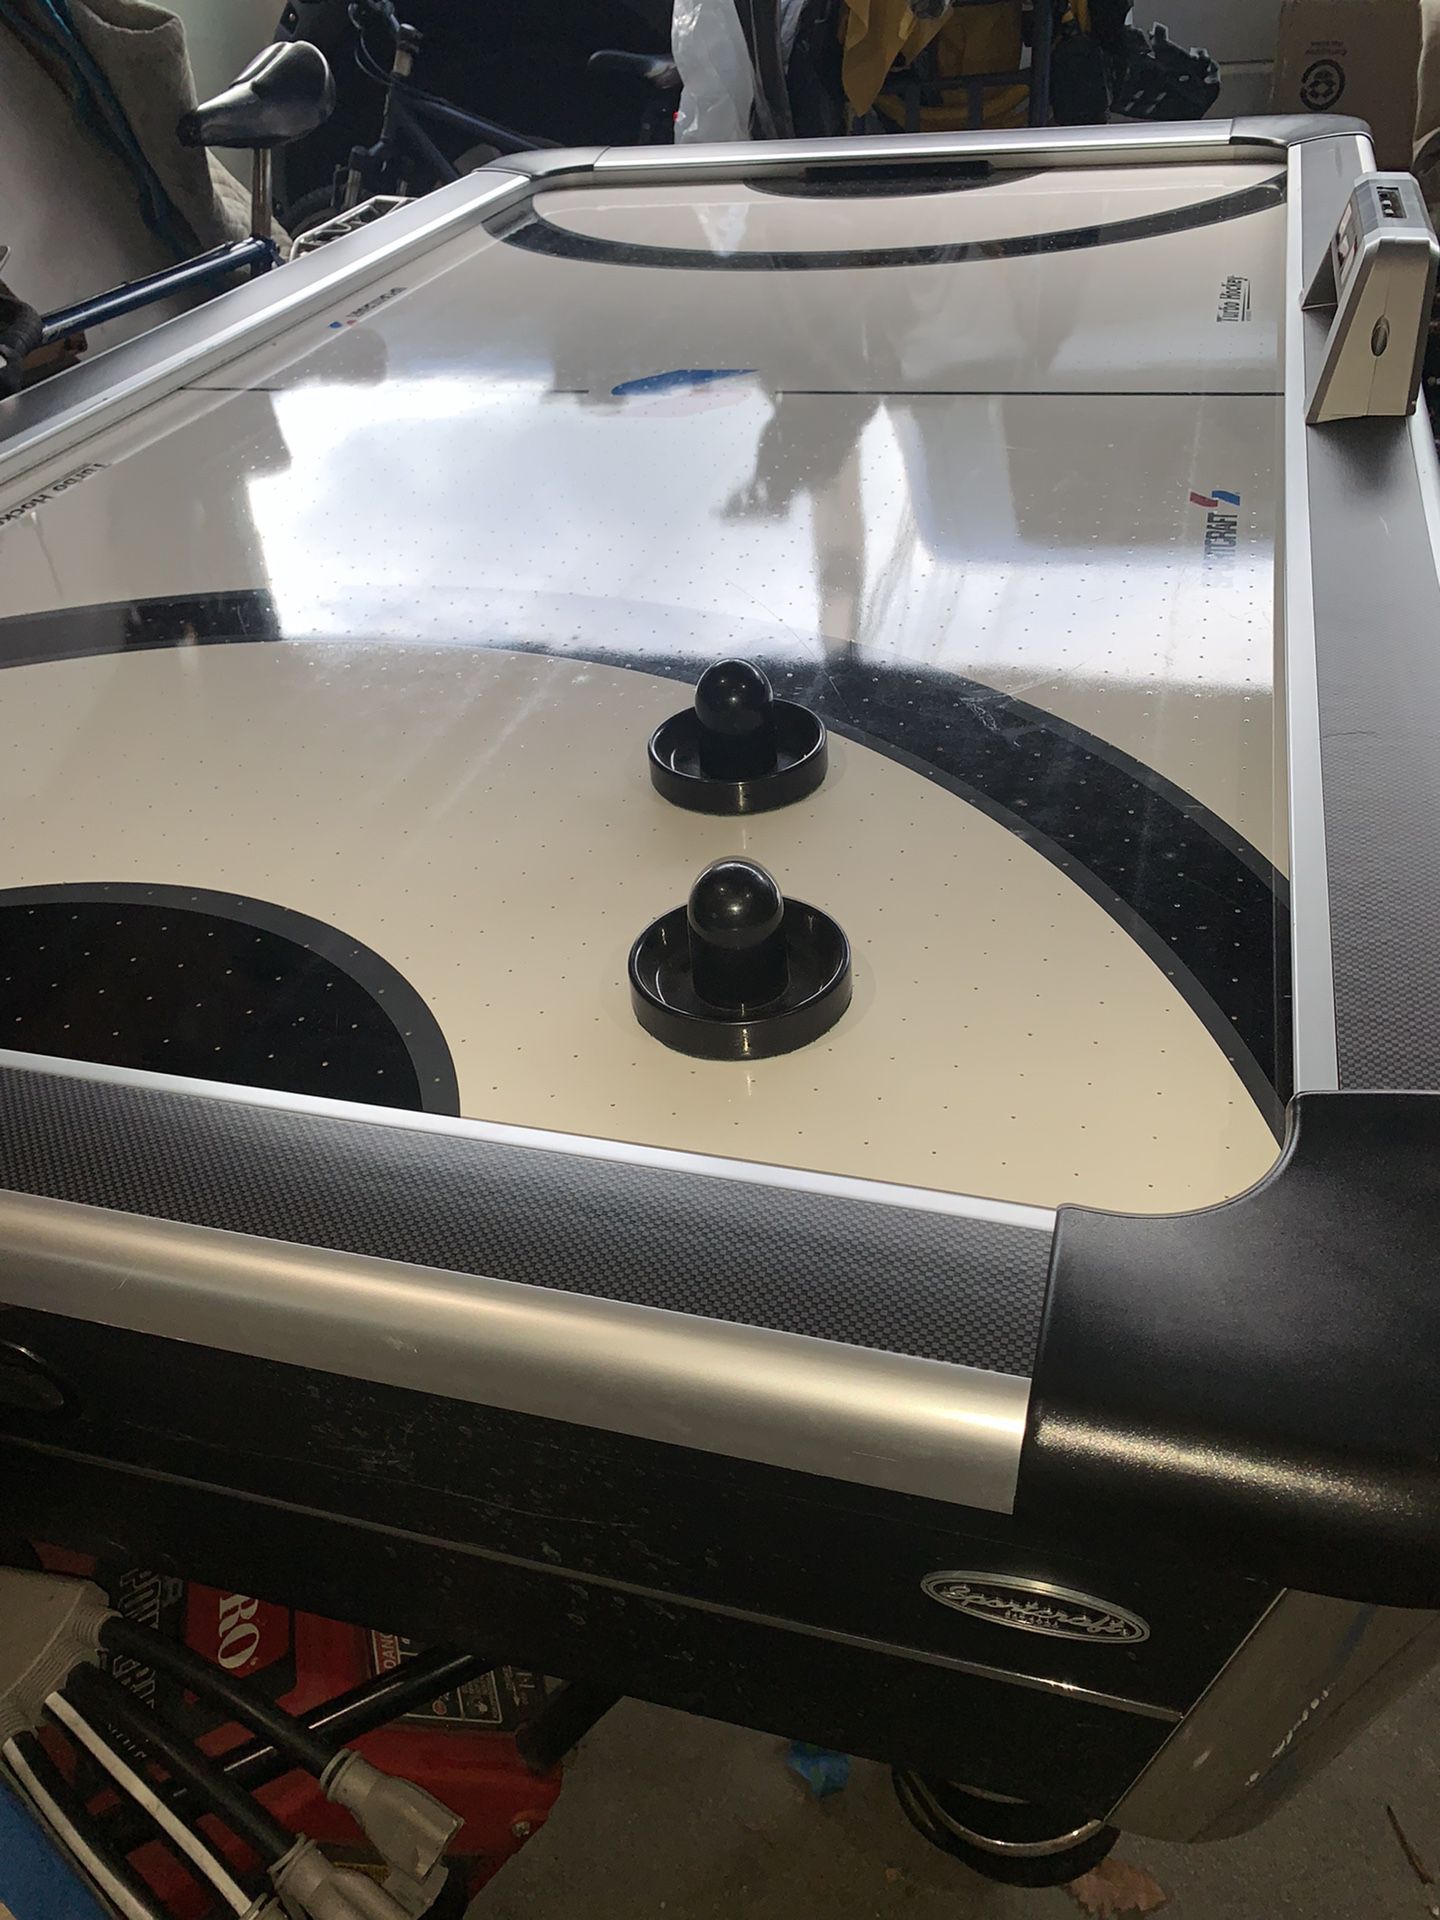 Sportcraft turbo hockey air Powered Table Like New 